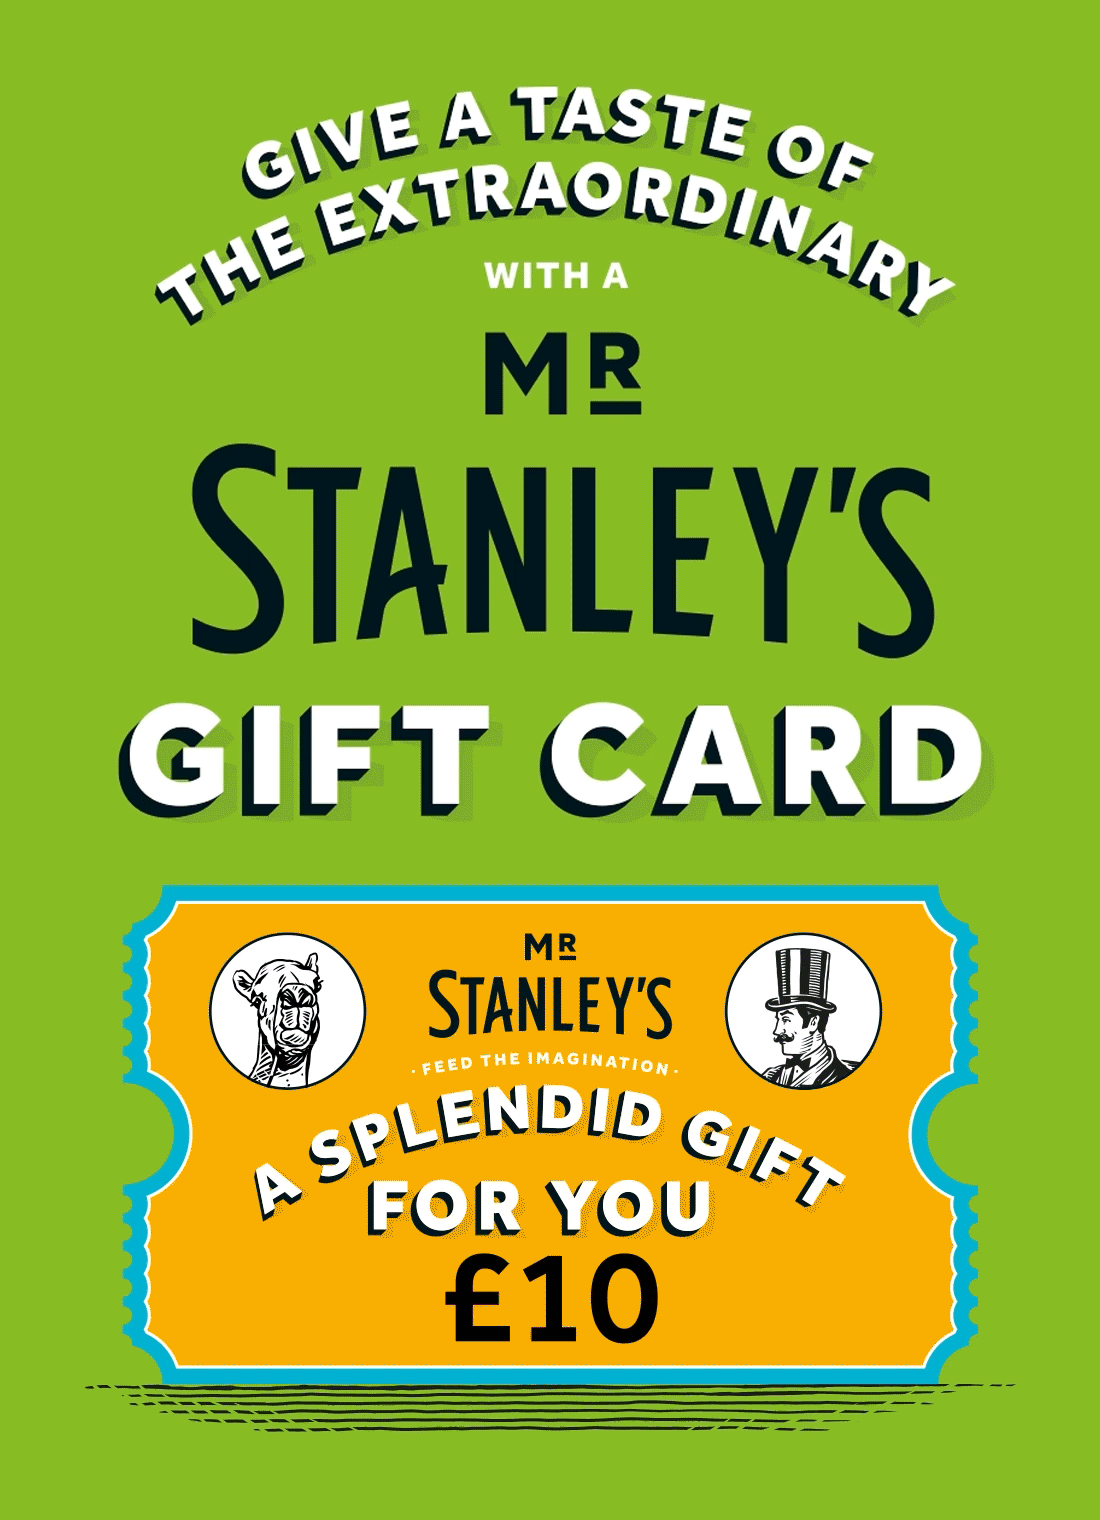 Mr. Stanley's E-Gift Card